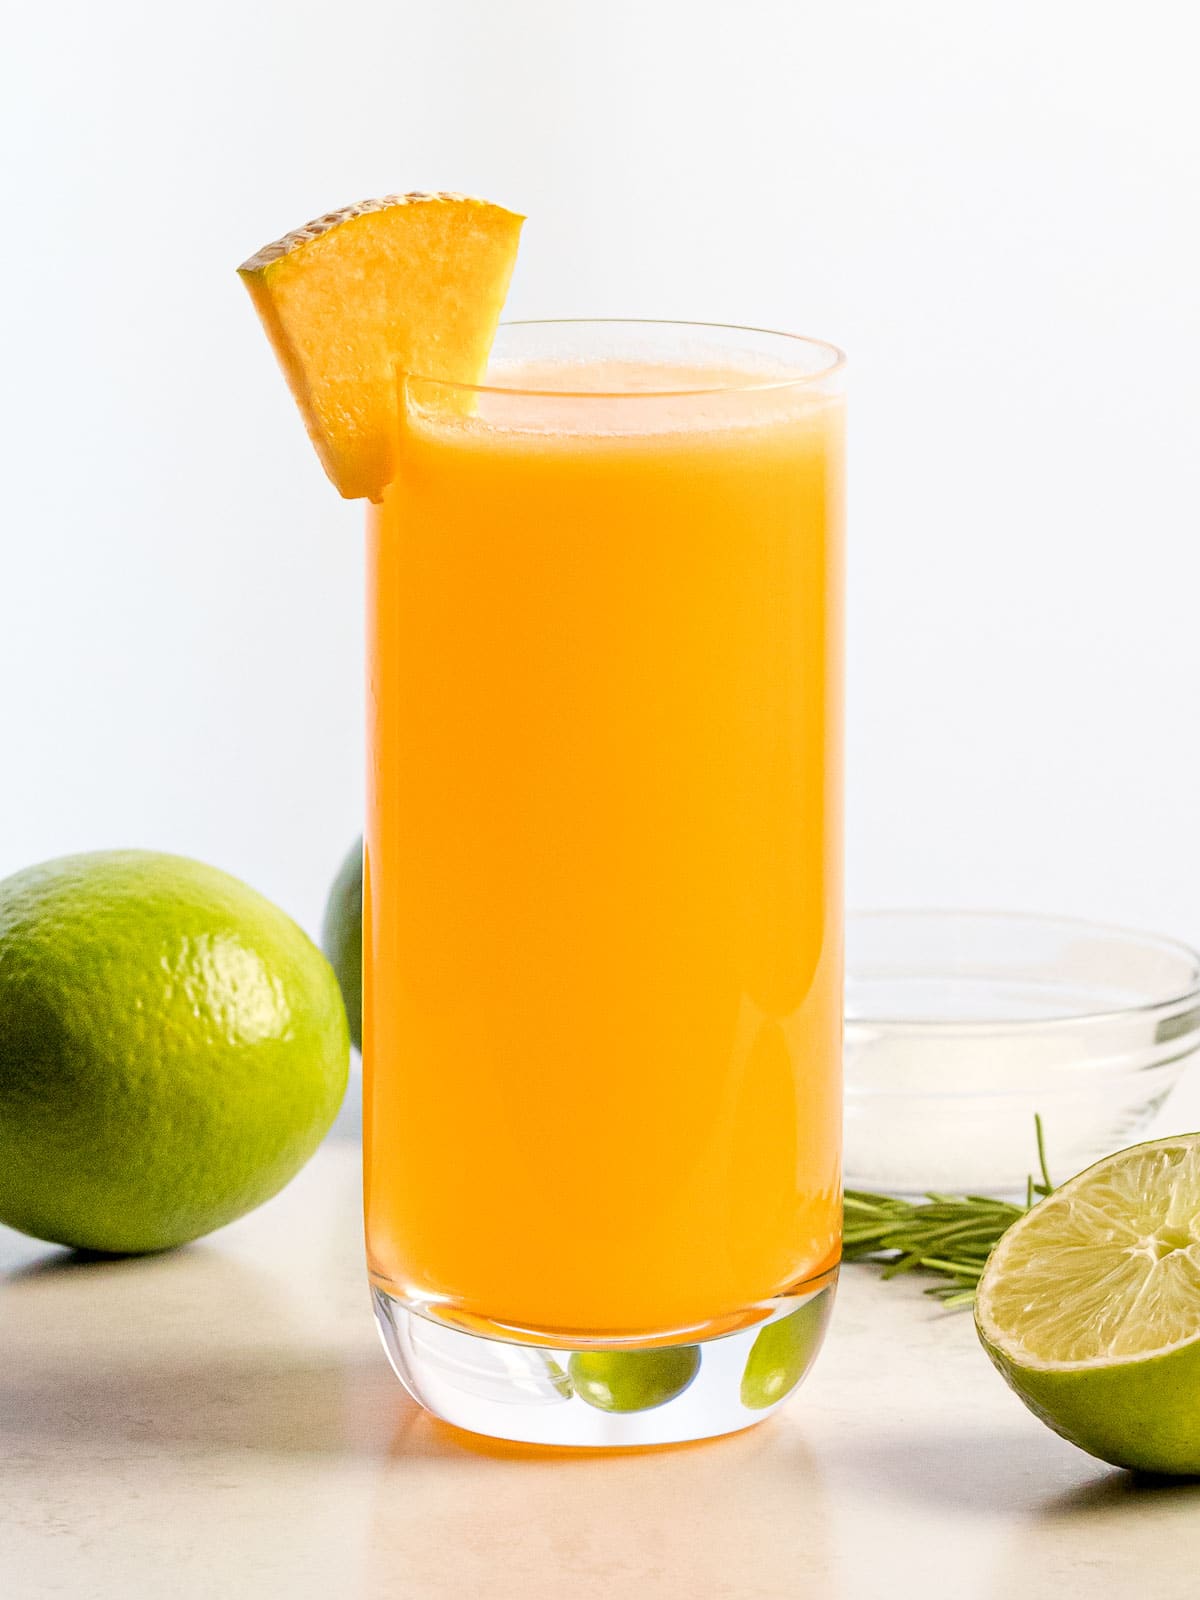 a glass of cantaloupe agua fresca next to limes